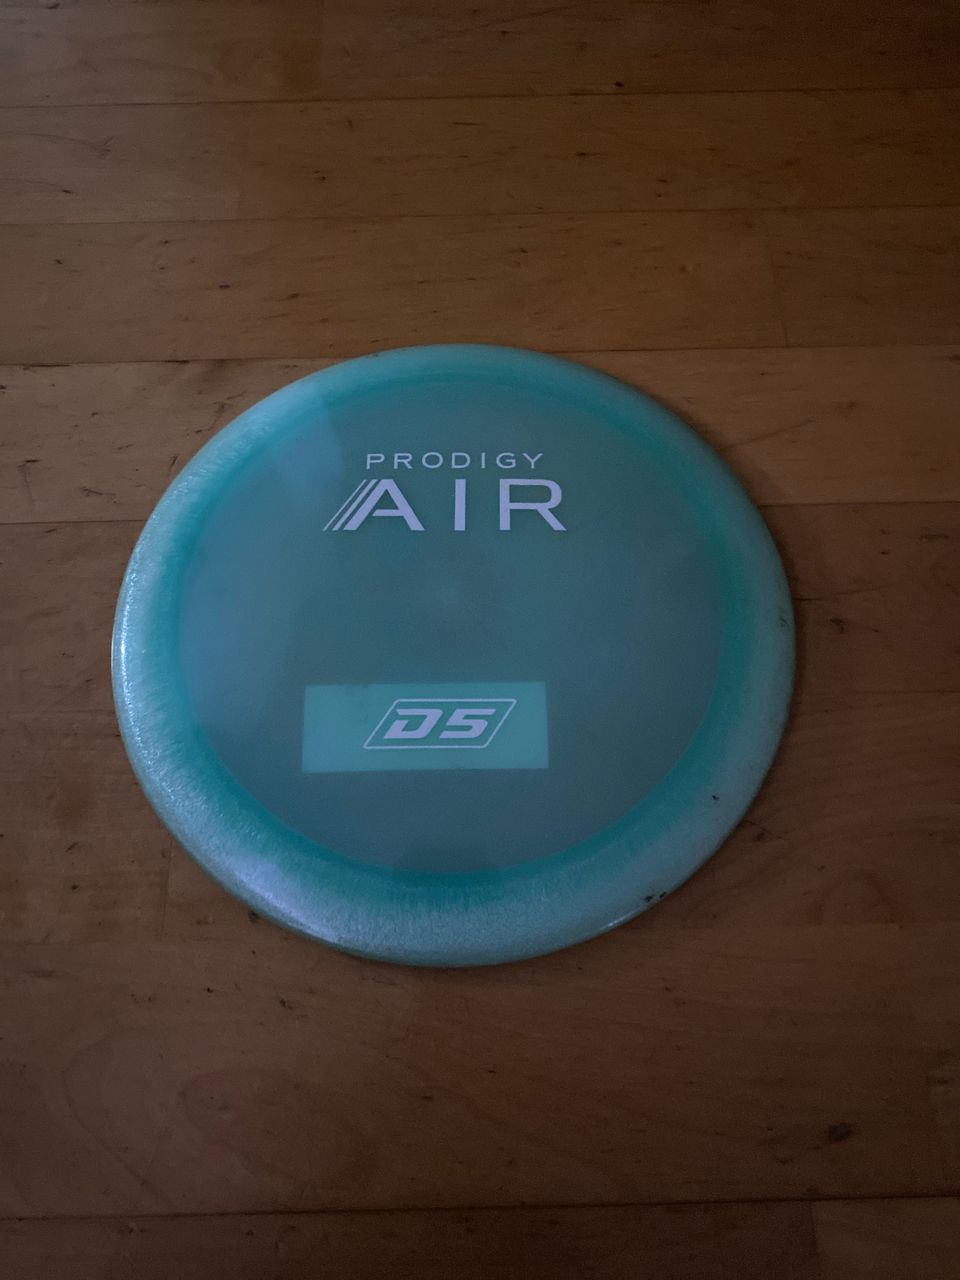 Prodigy AIR D5